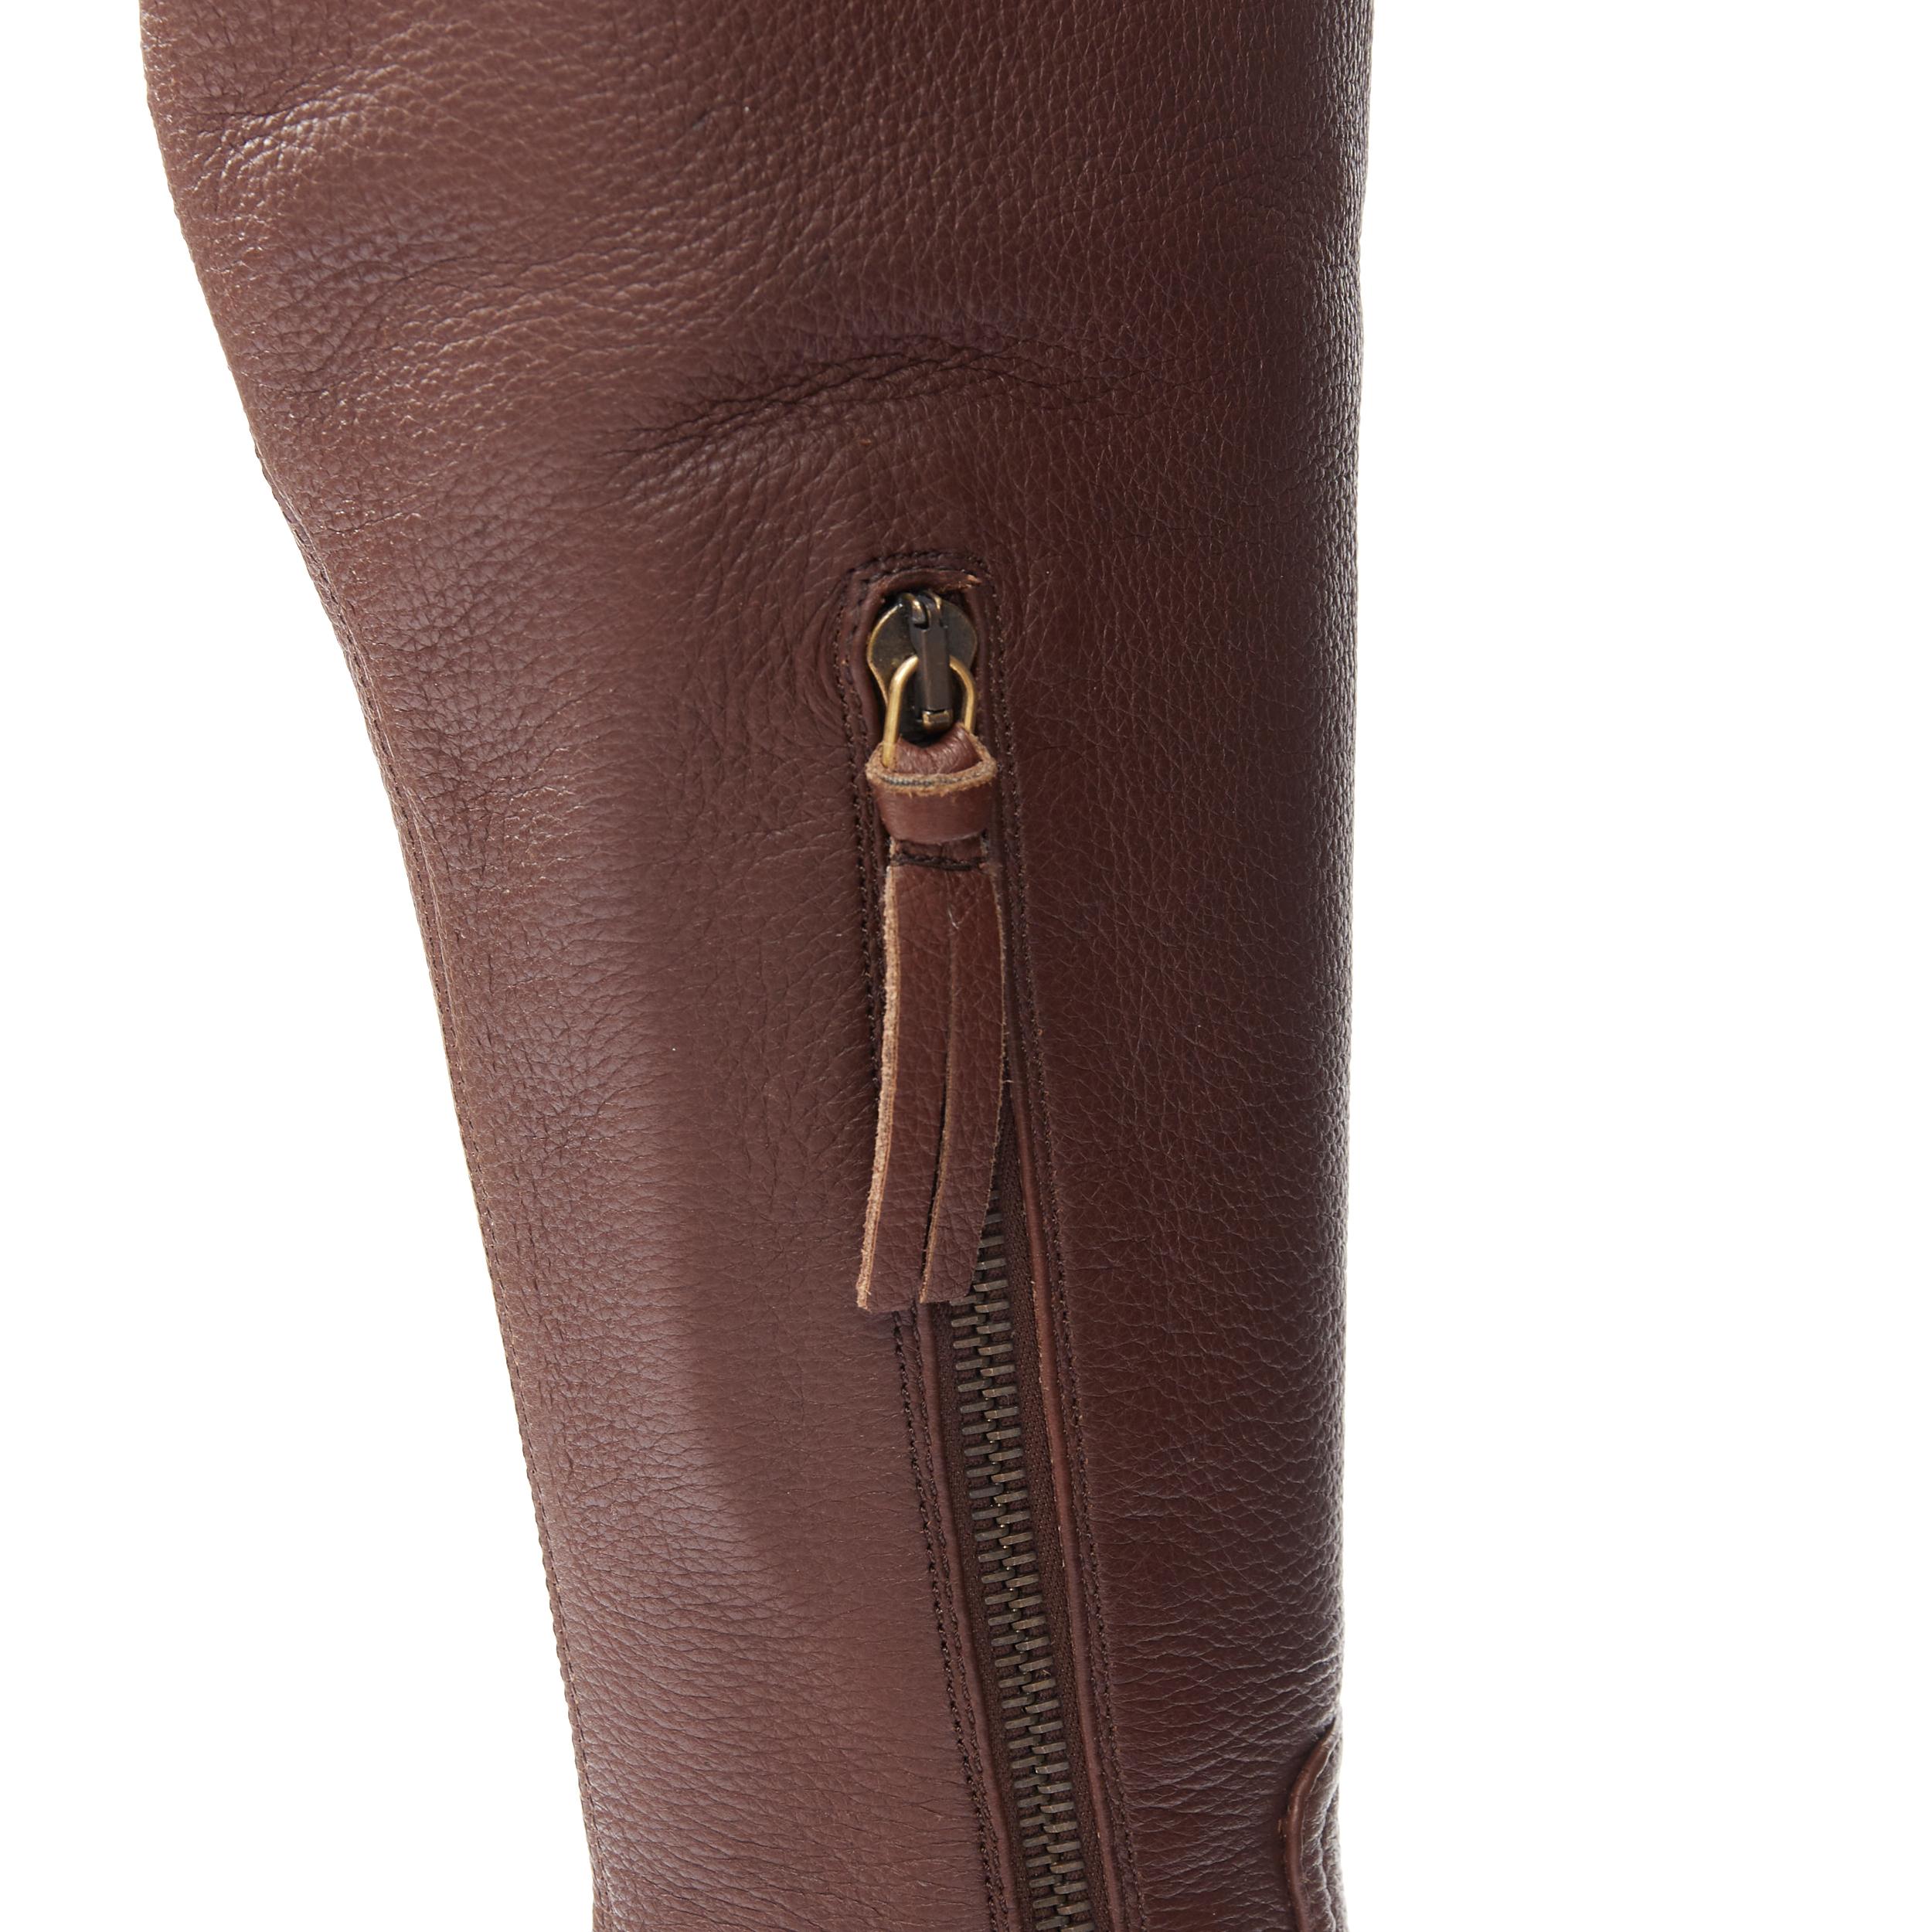 MIU MIU dark brown leather suede foldover wooden heel platofrm tall boot EU37.5 1